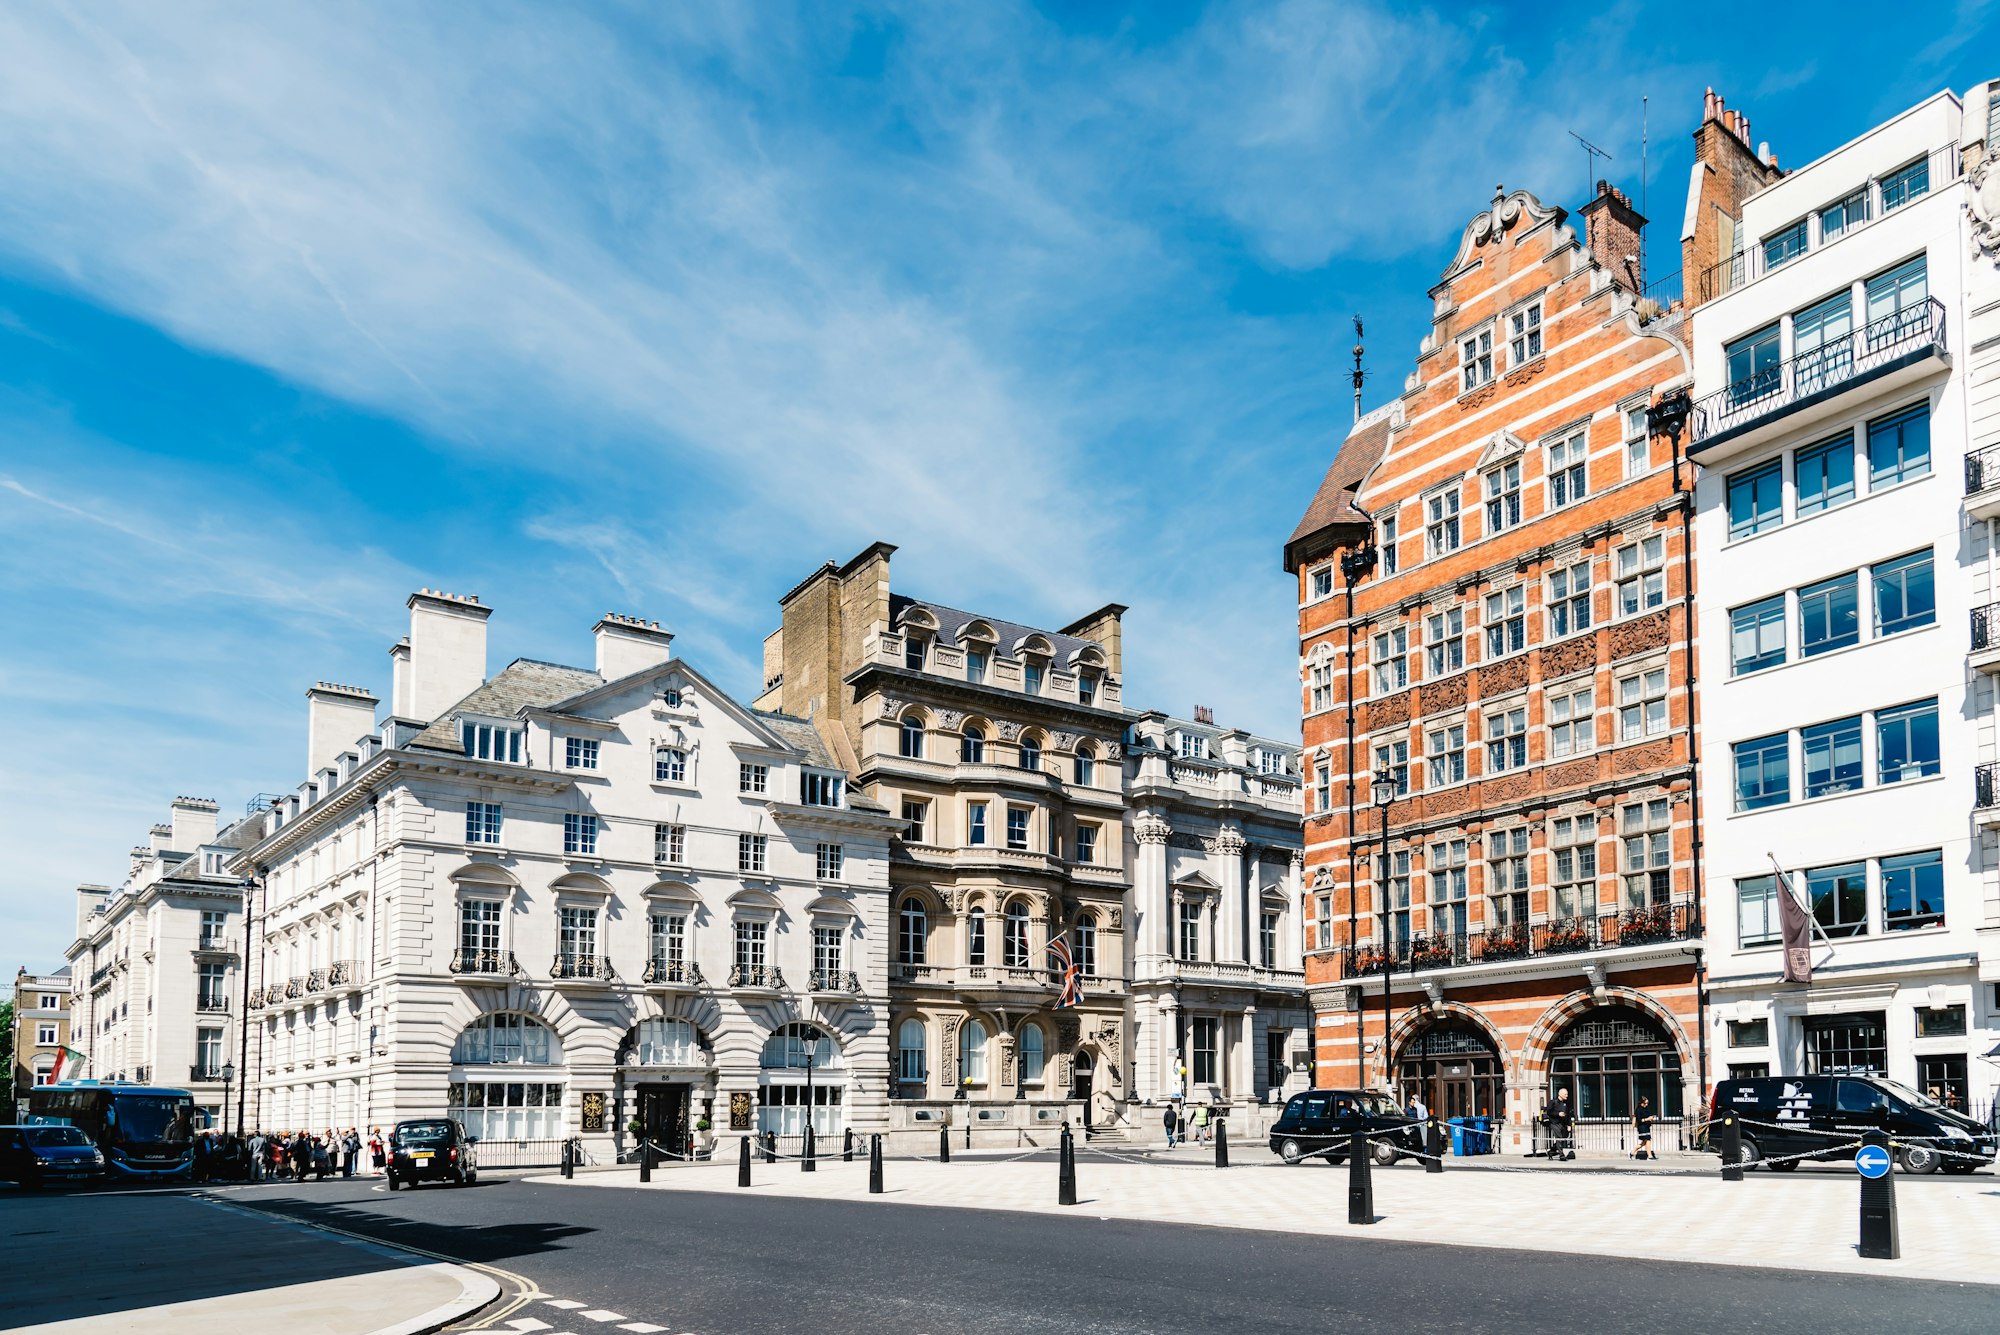 Luxury apartment buildings in a wealthy neighborhood of London, England, UK